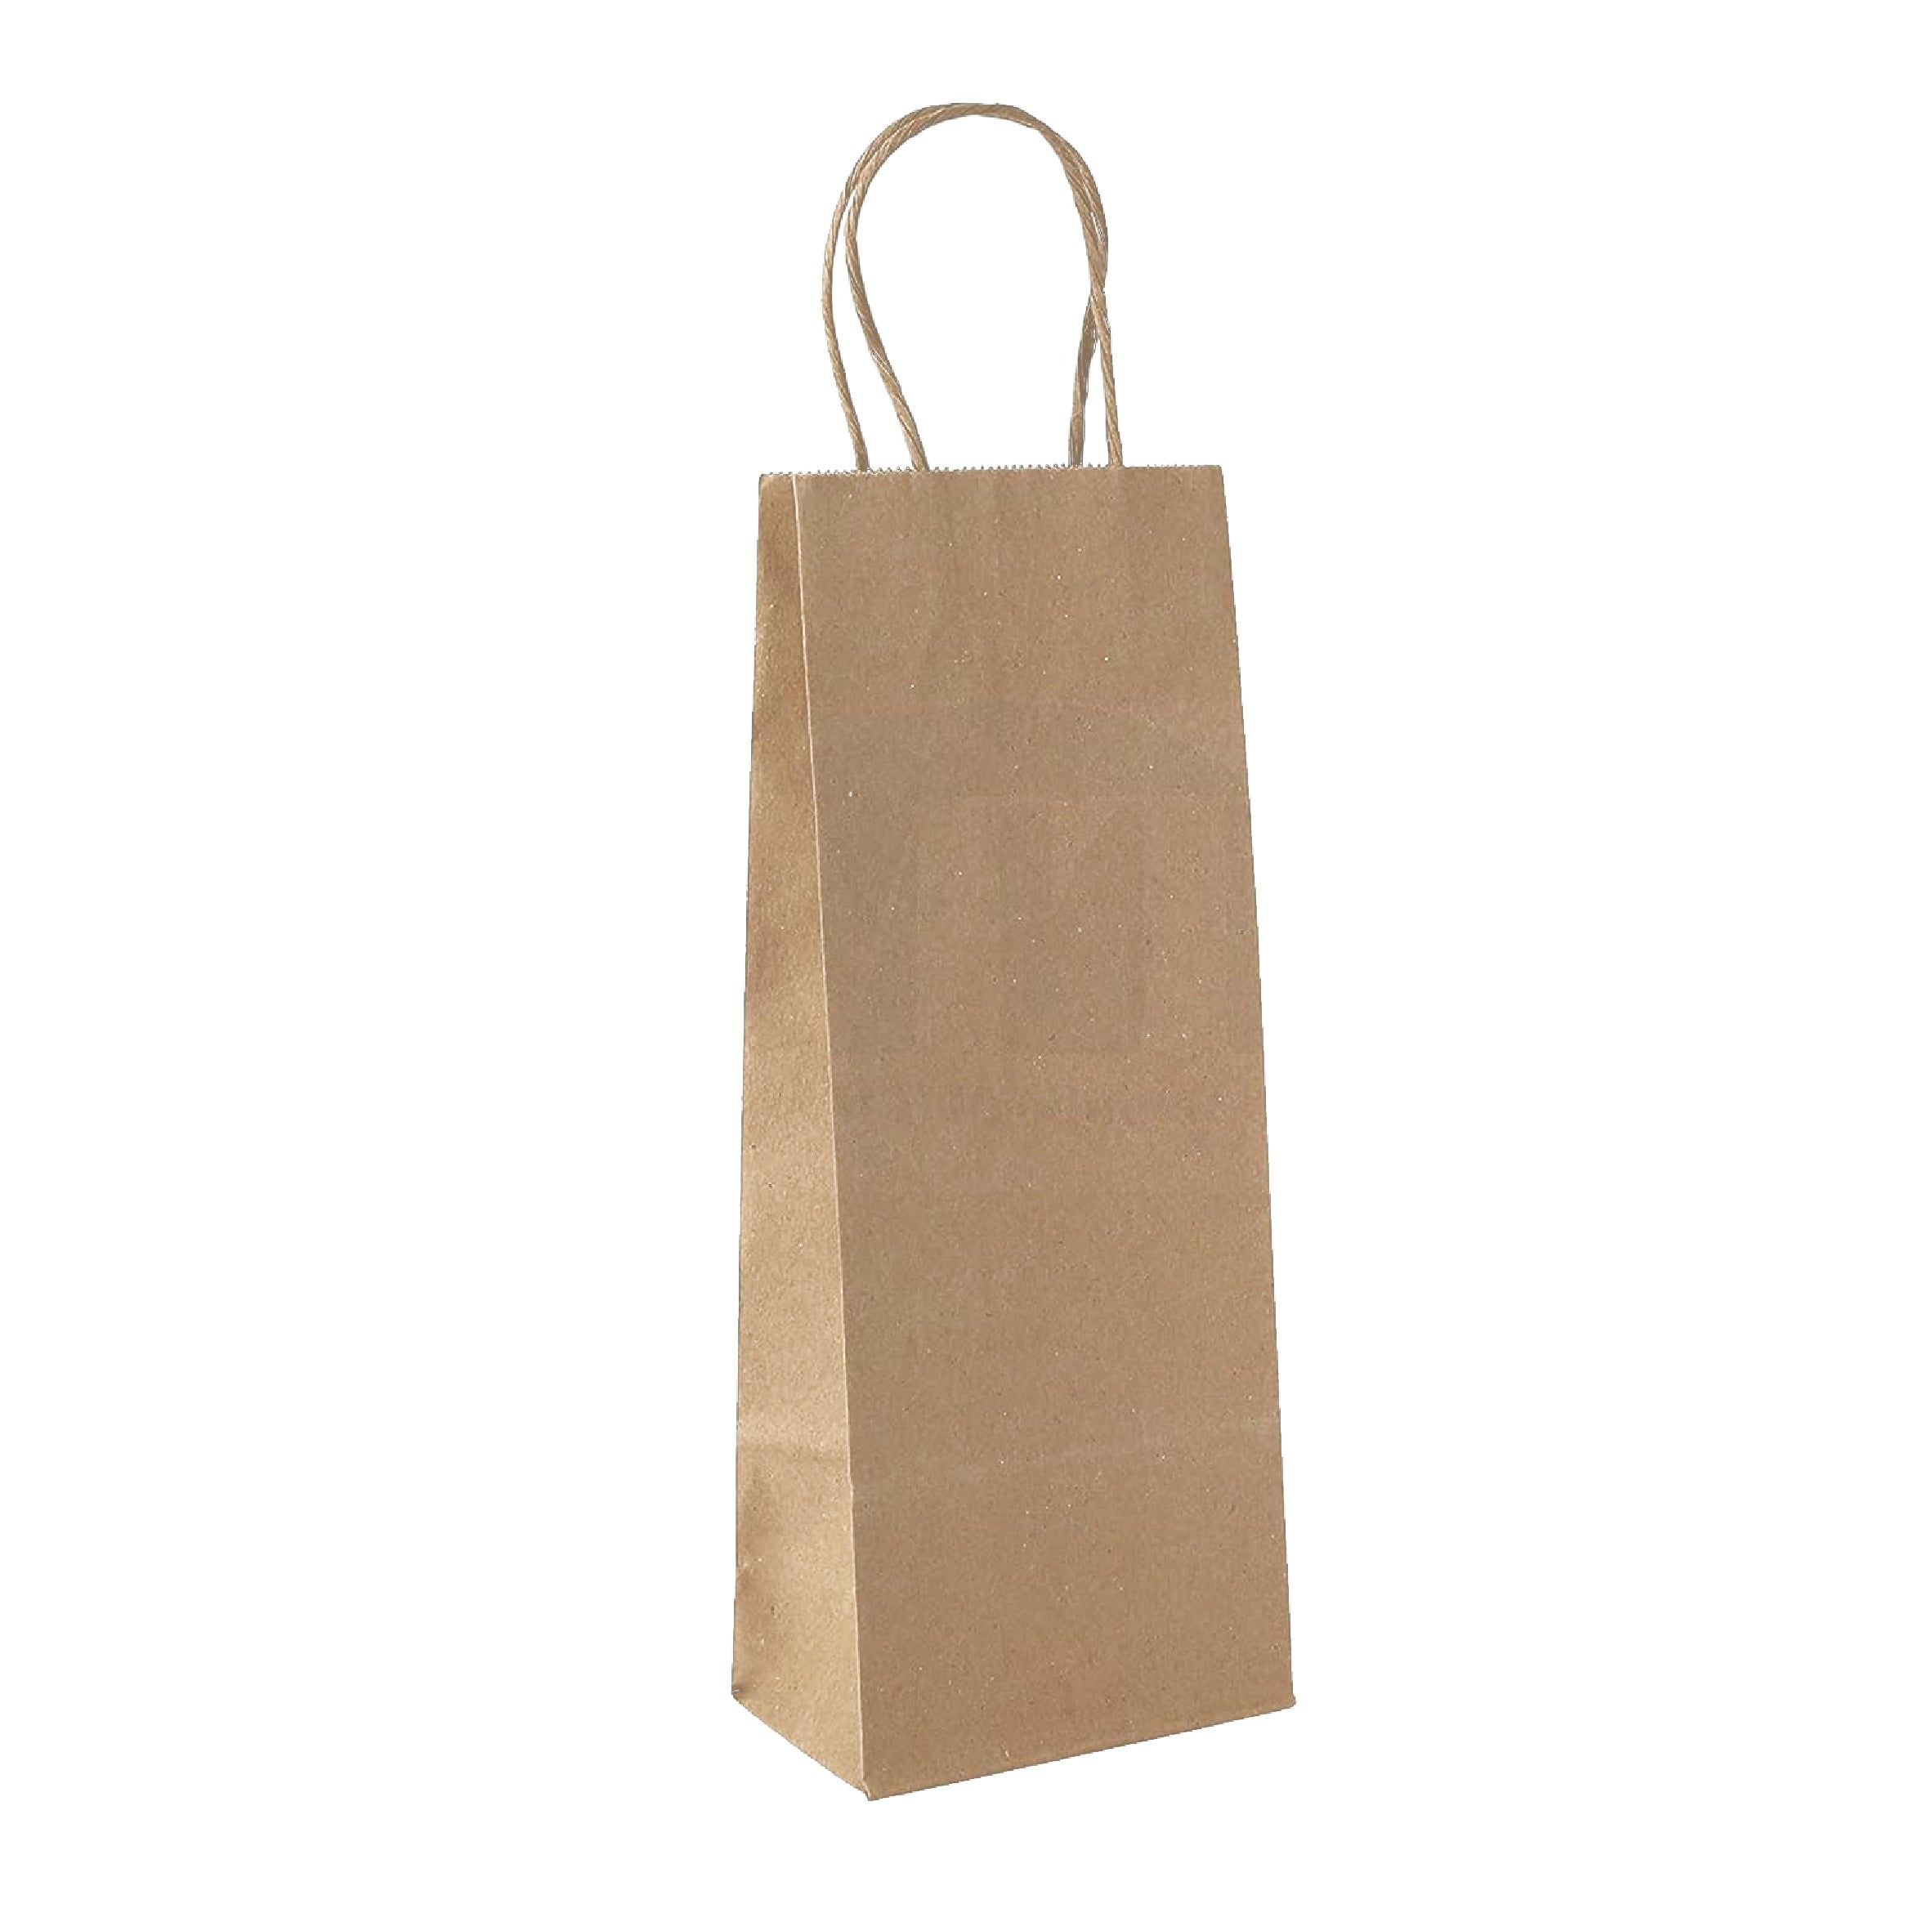 5.3 x 13 x 3.3 inch Paper Handle Shopping Bag